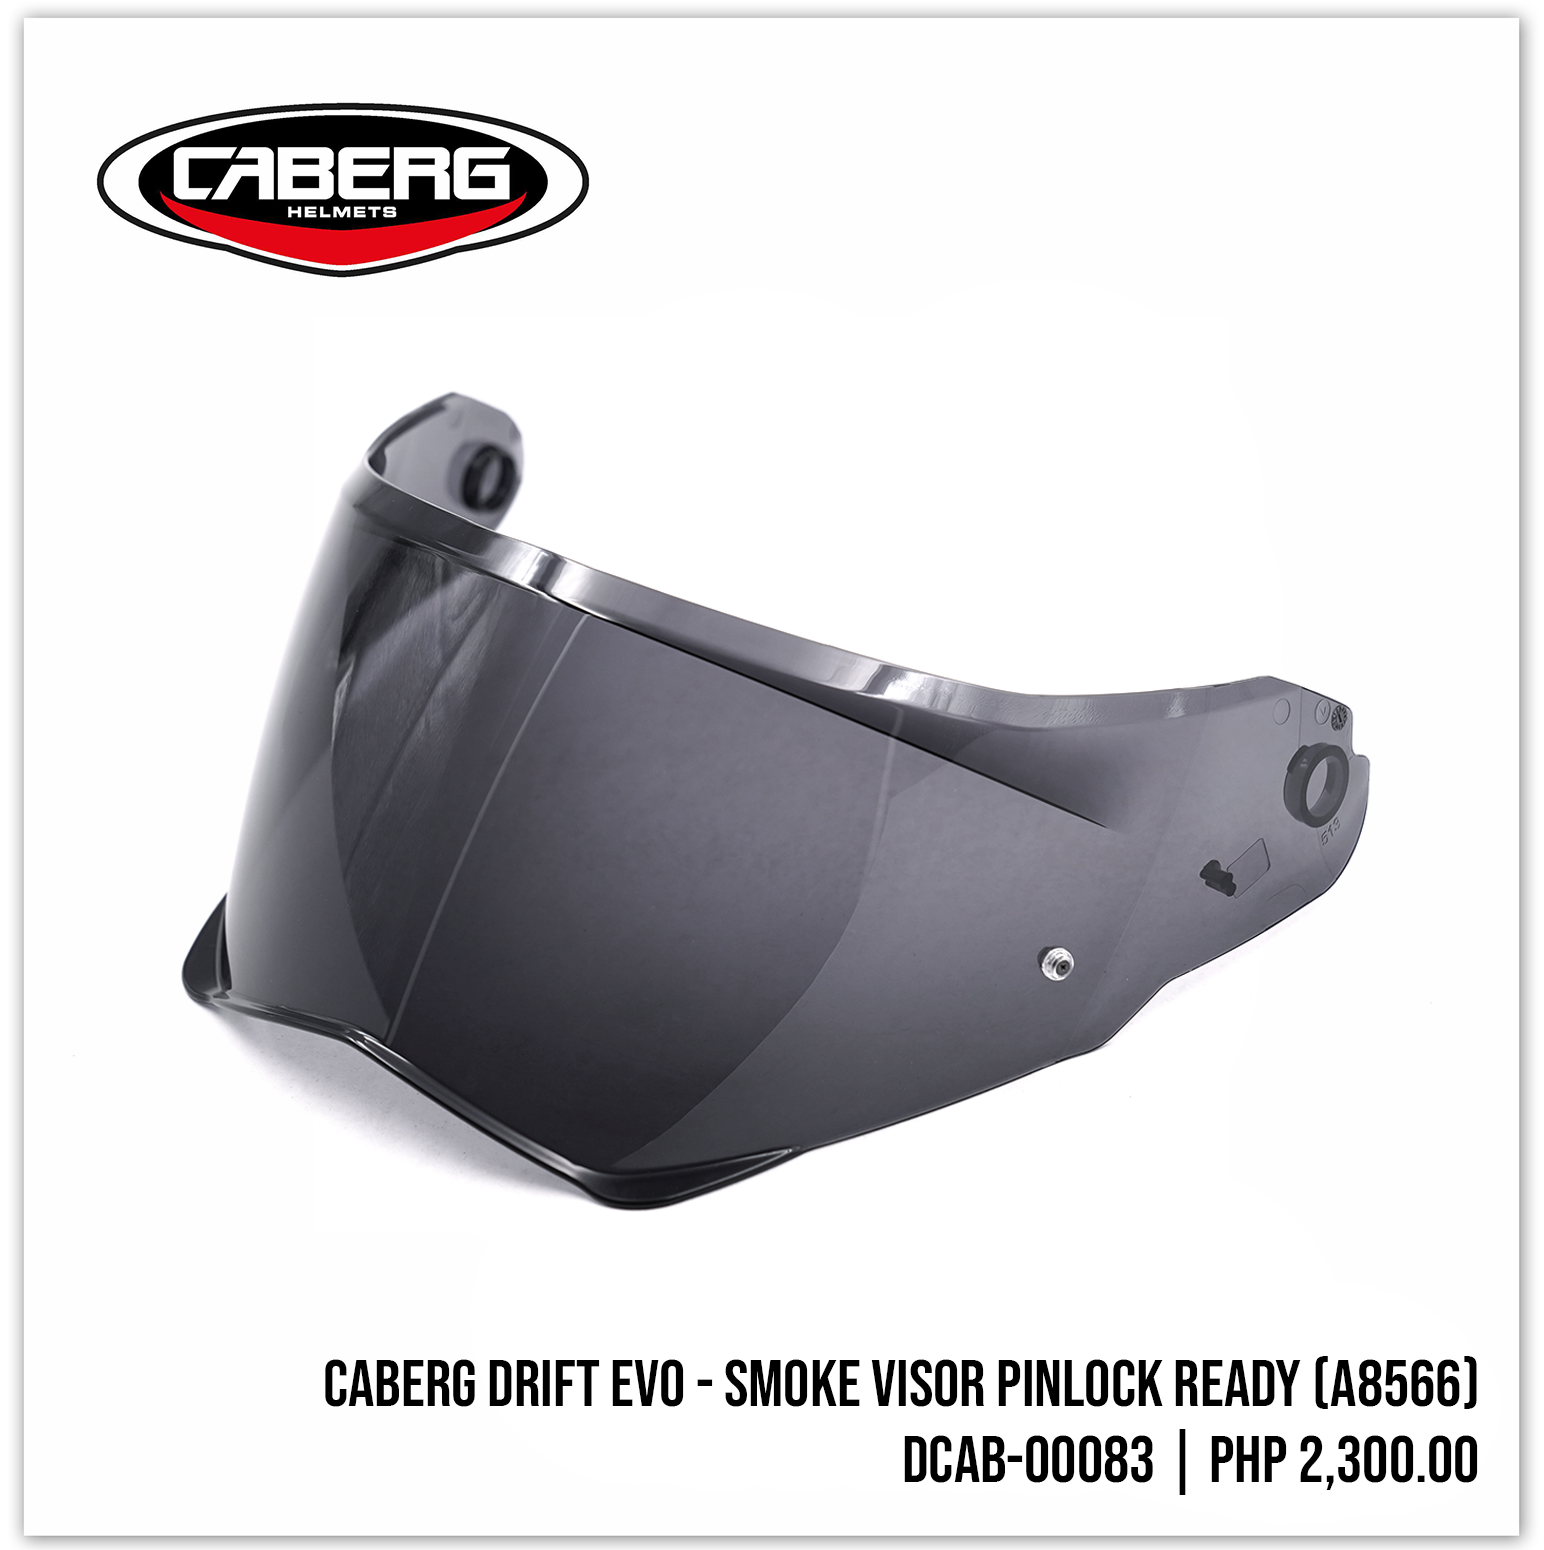 Caberg Drift Evo - Smoke Visor Pinlock Ready (A8566)